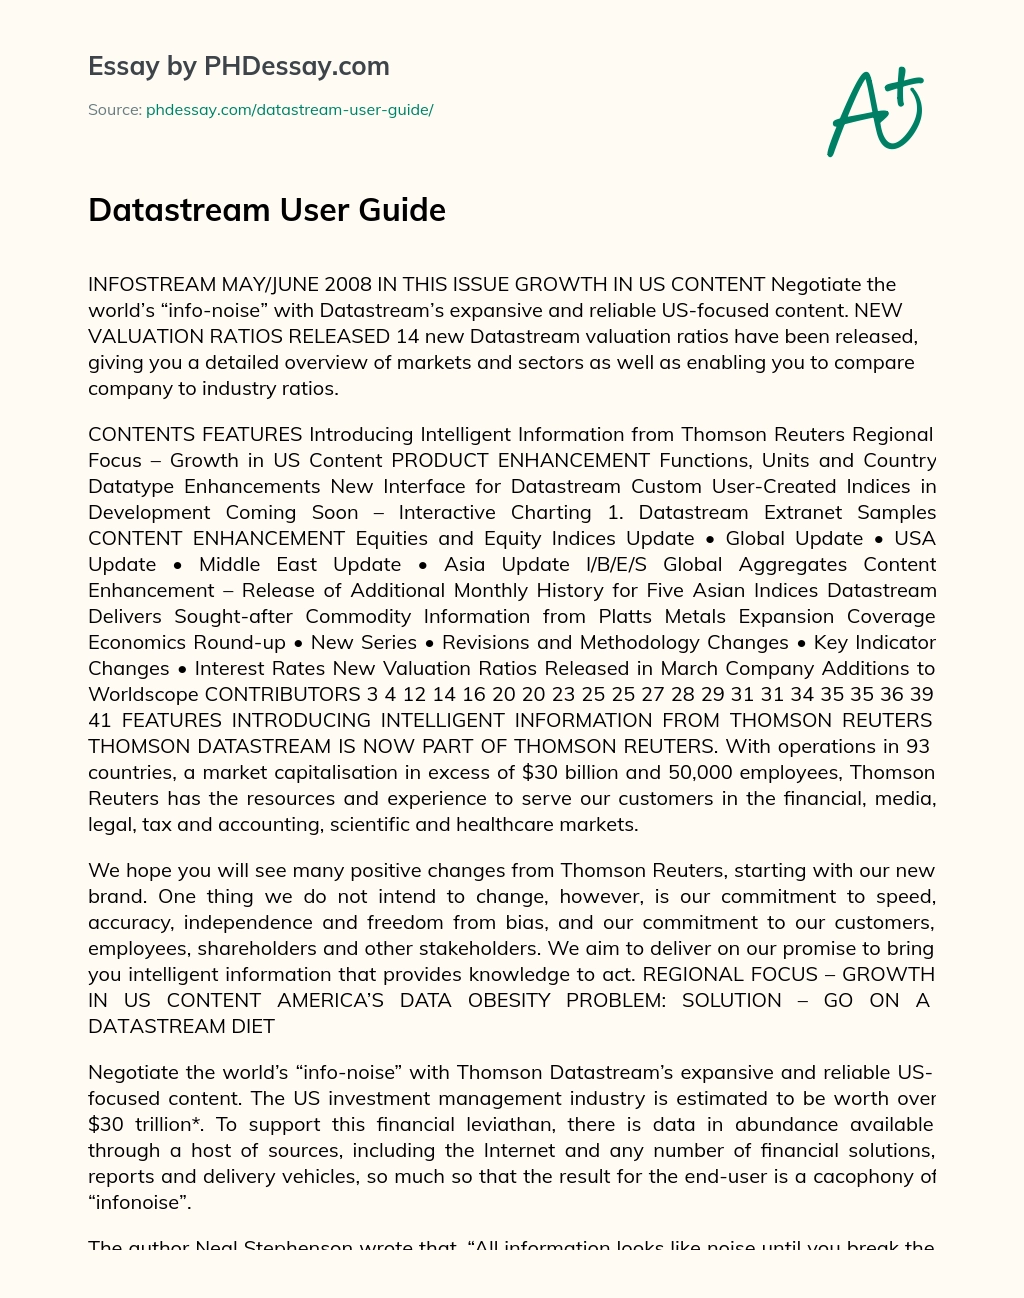 Datastream User Guide essay